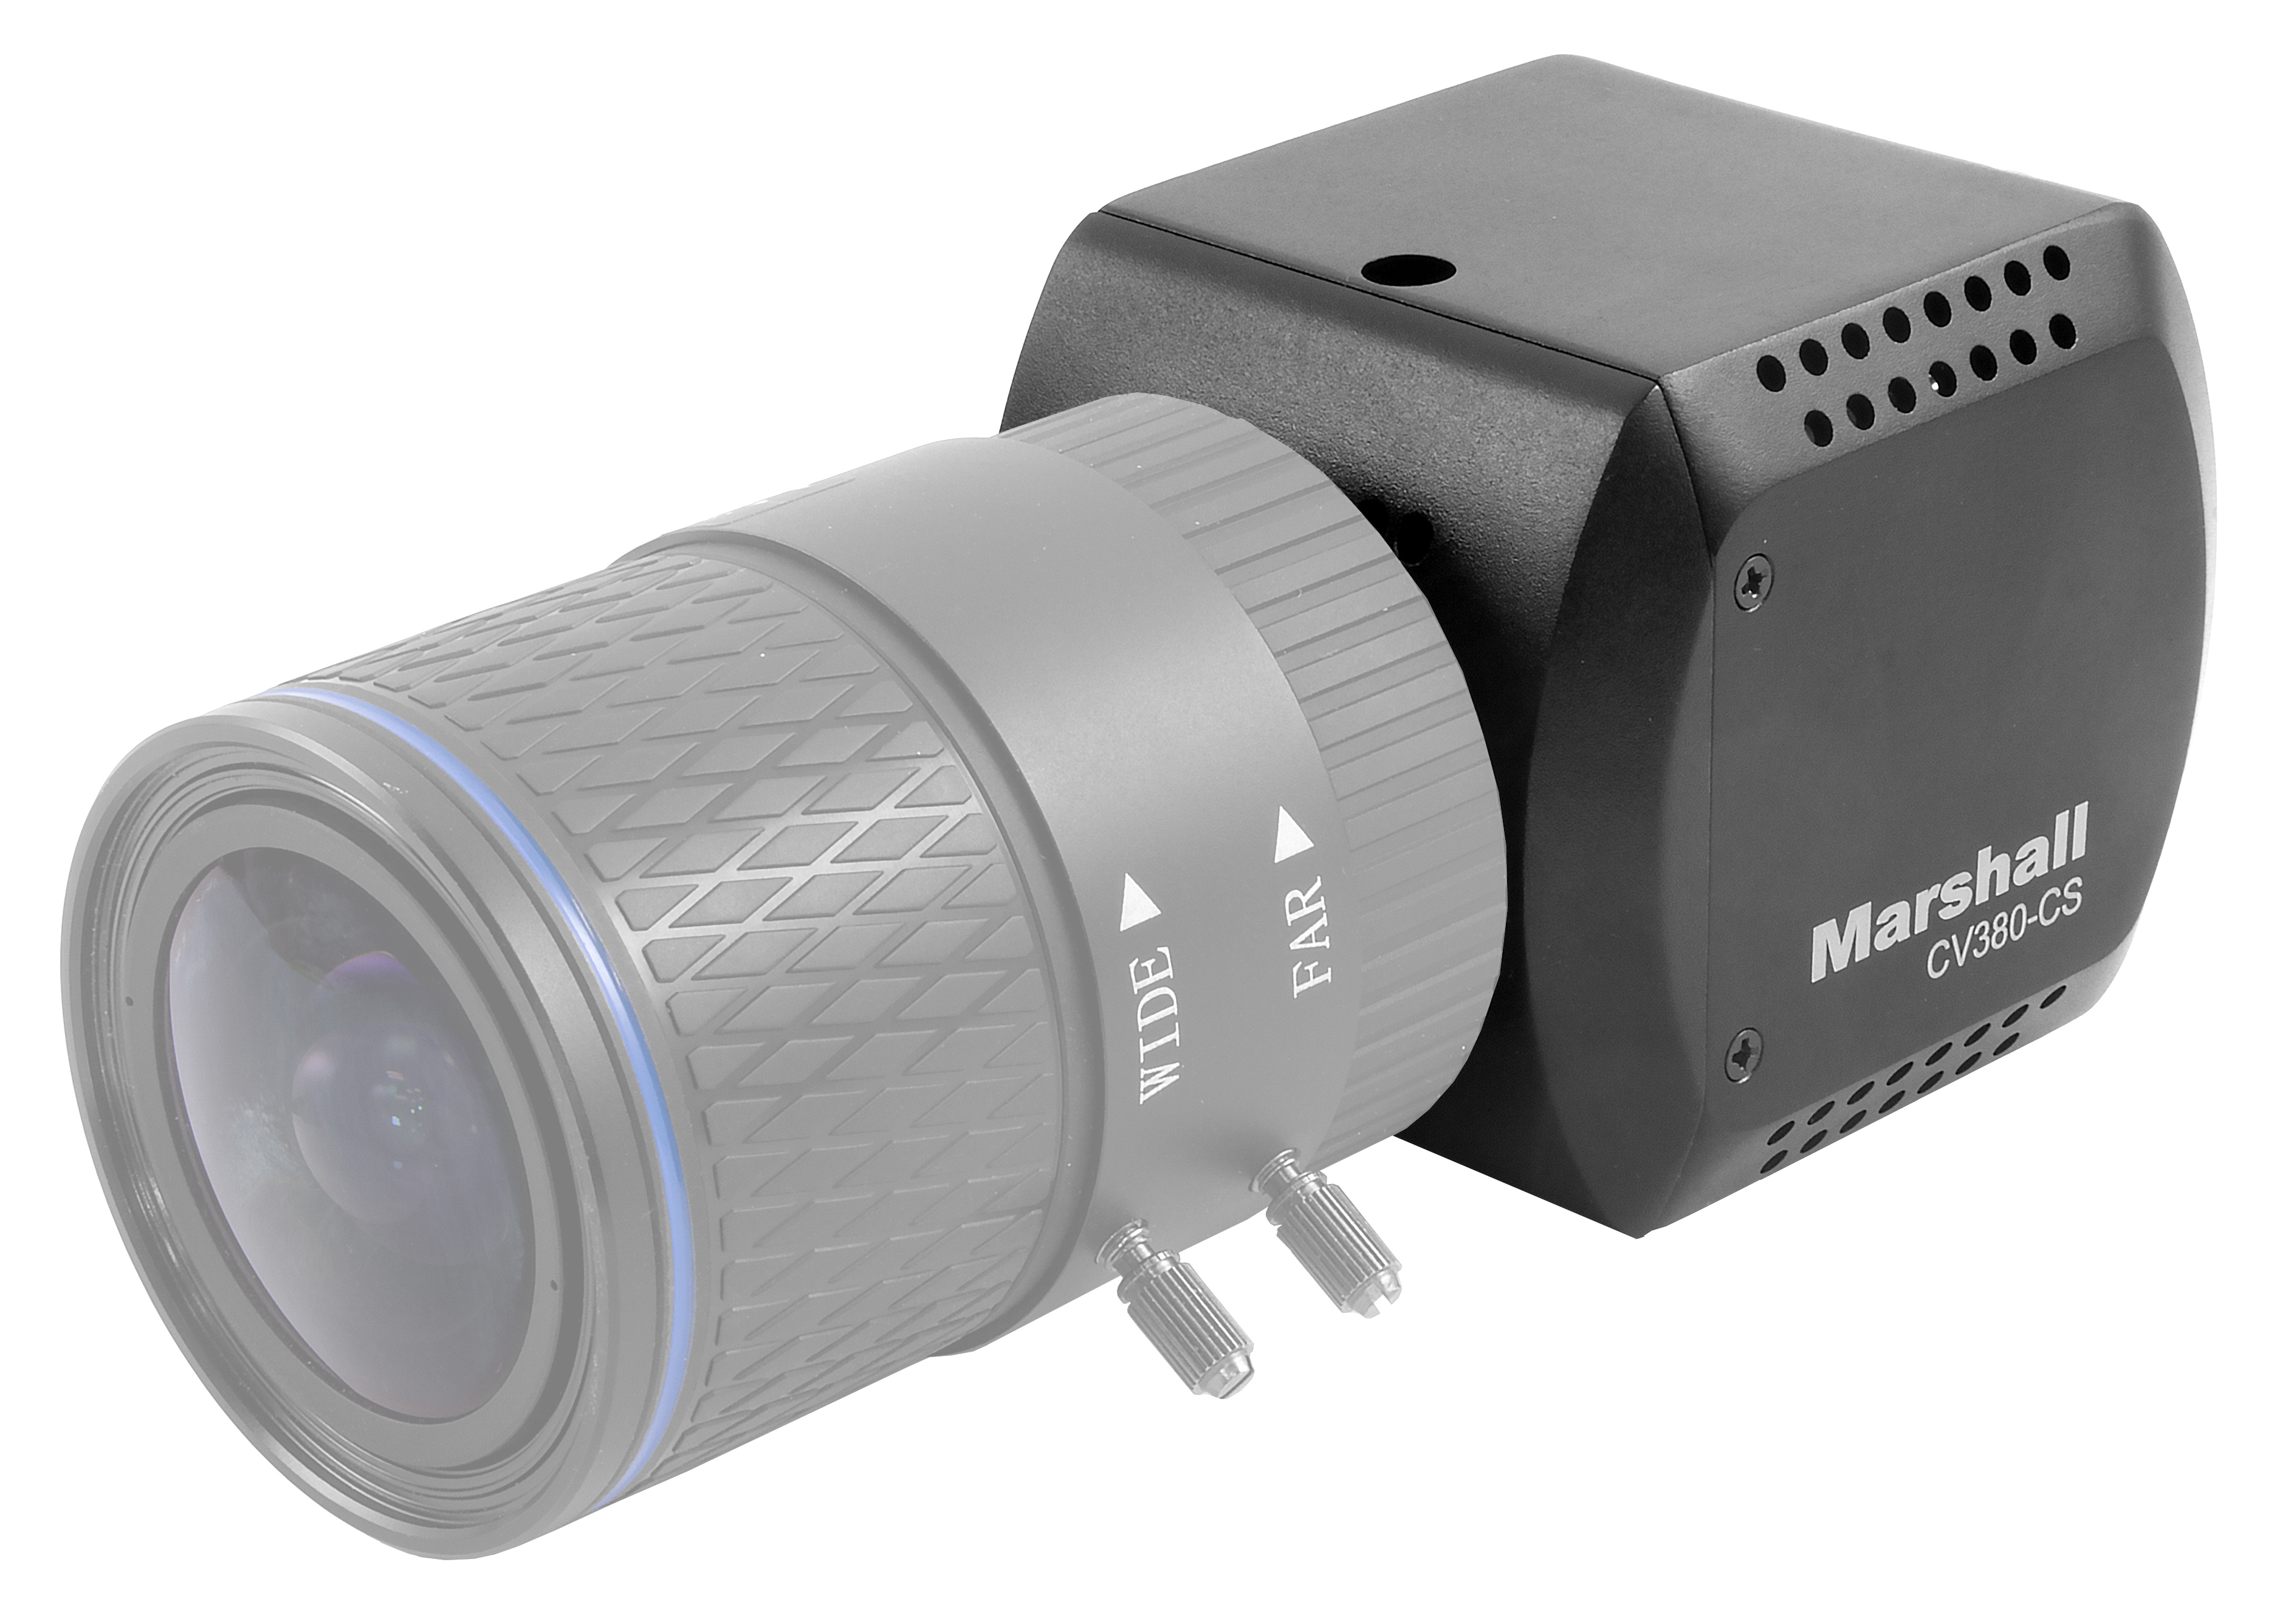 Marshall CV380-CS 4K30p Compact Broadcast Camera with CS Len